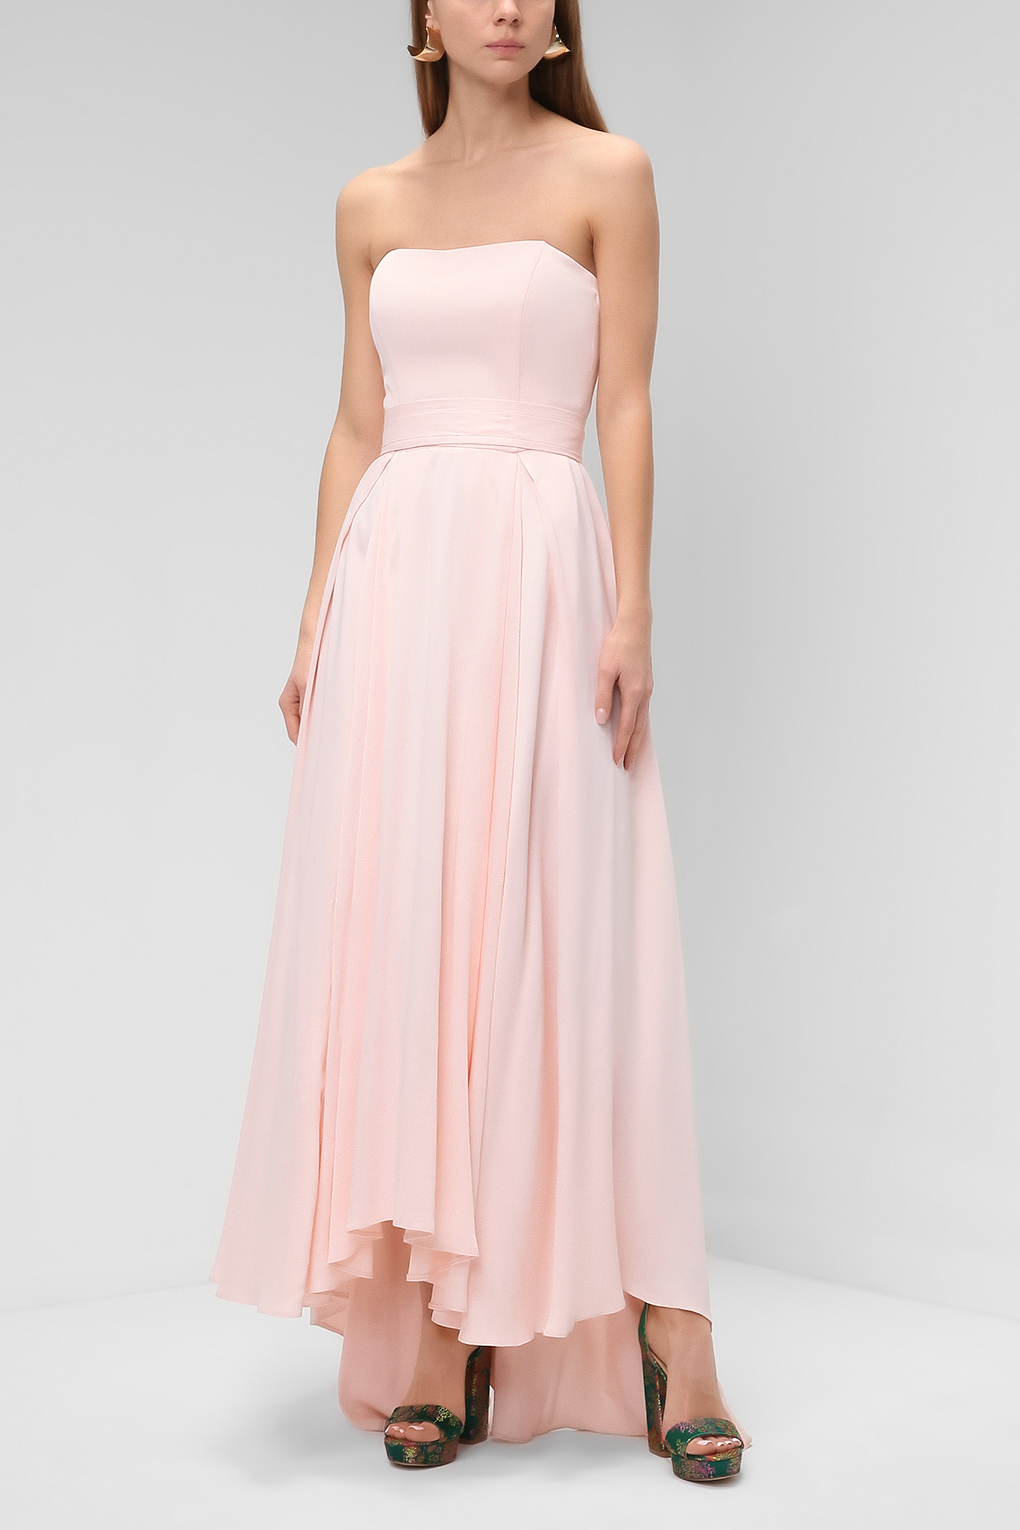 фото Платье женское paola ray pr120-3087 розовое xs